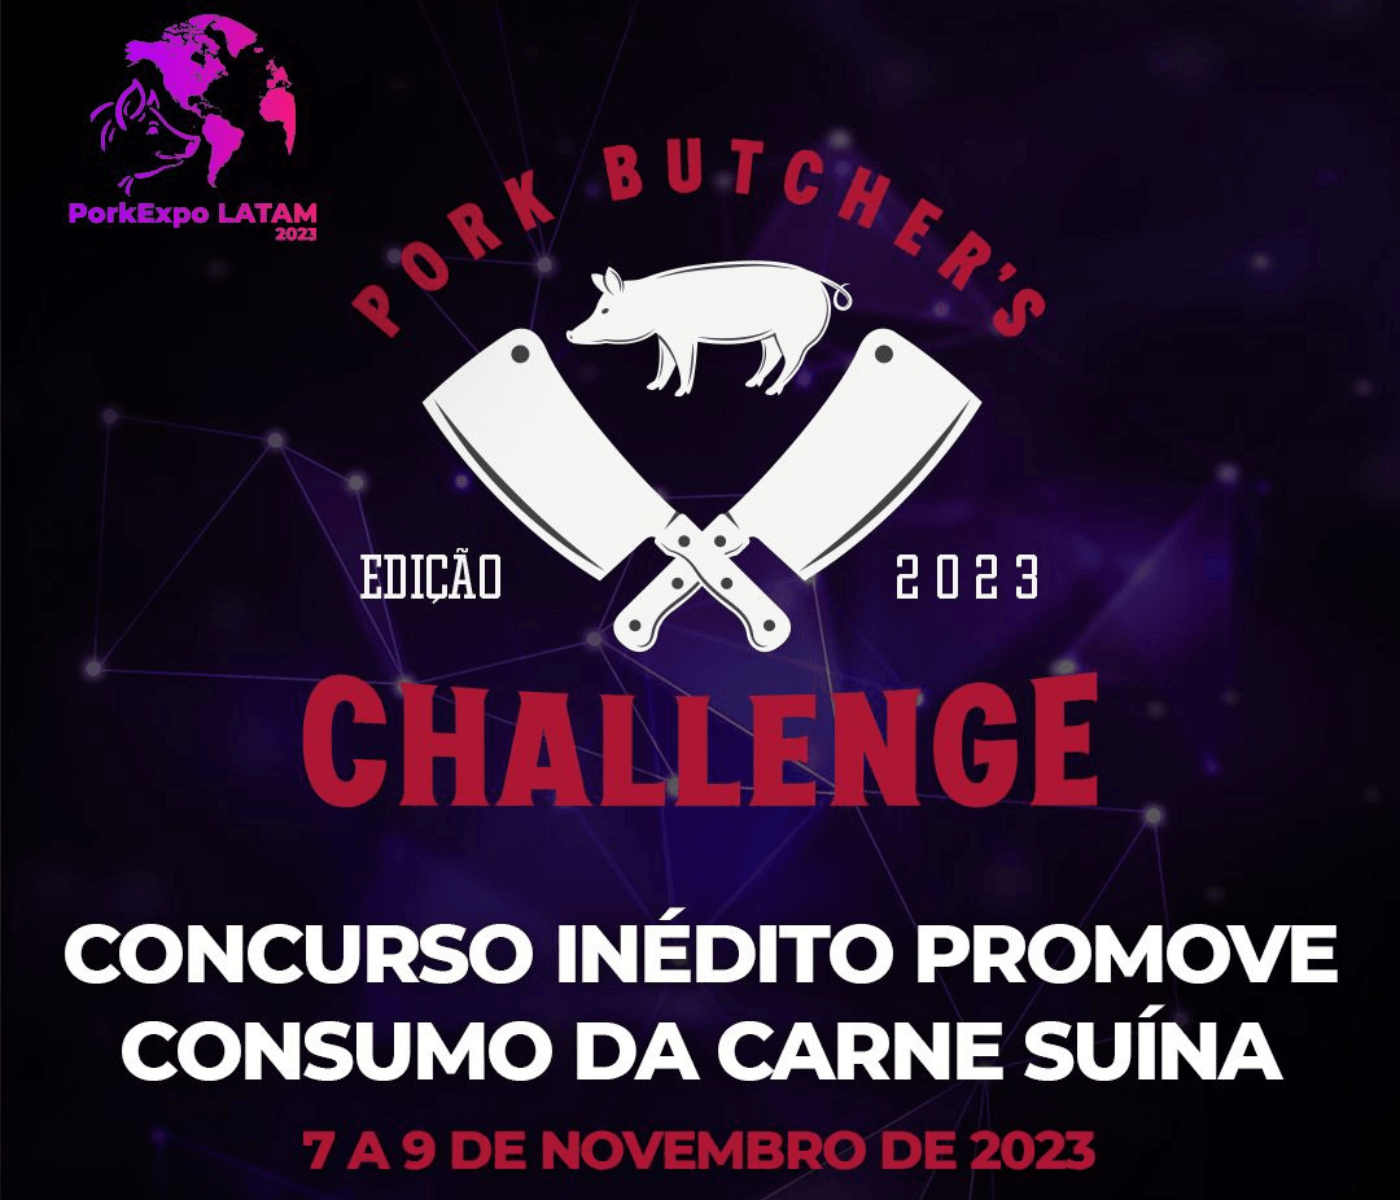 PorkExpo 2023 apresenta: Pork Butcher Challenger, concurso inédito promove consumo da carne suína